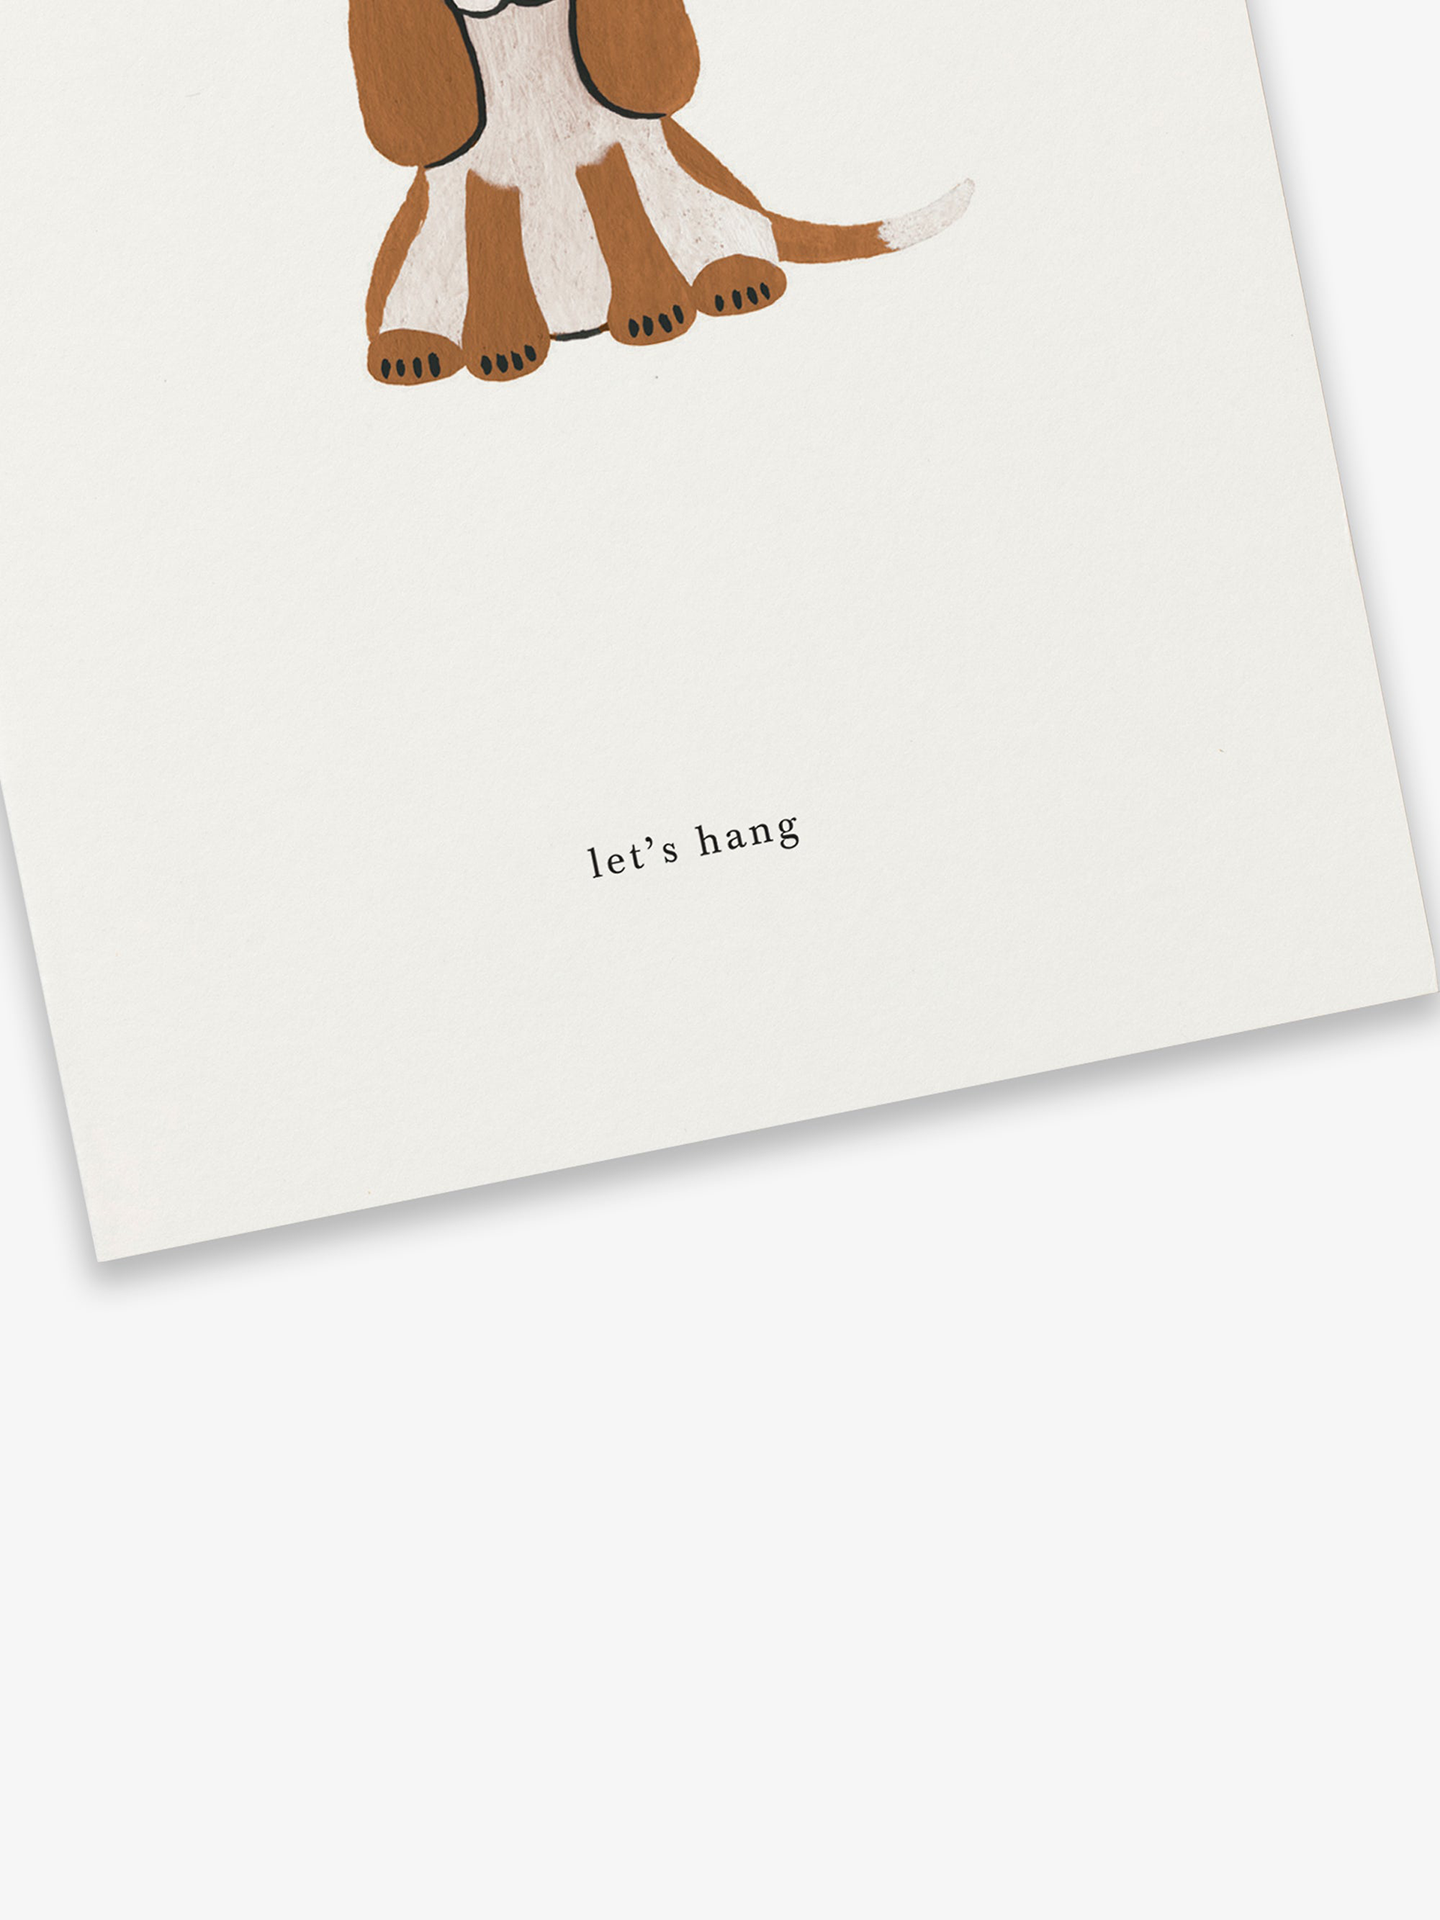 Basset hound card (let's hang) friendship card